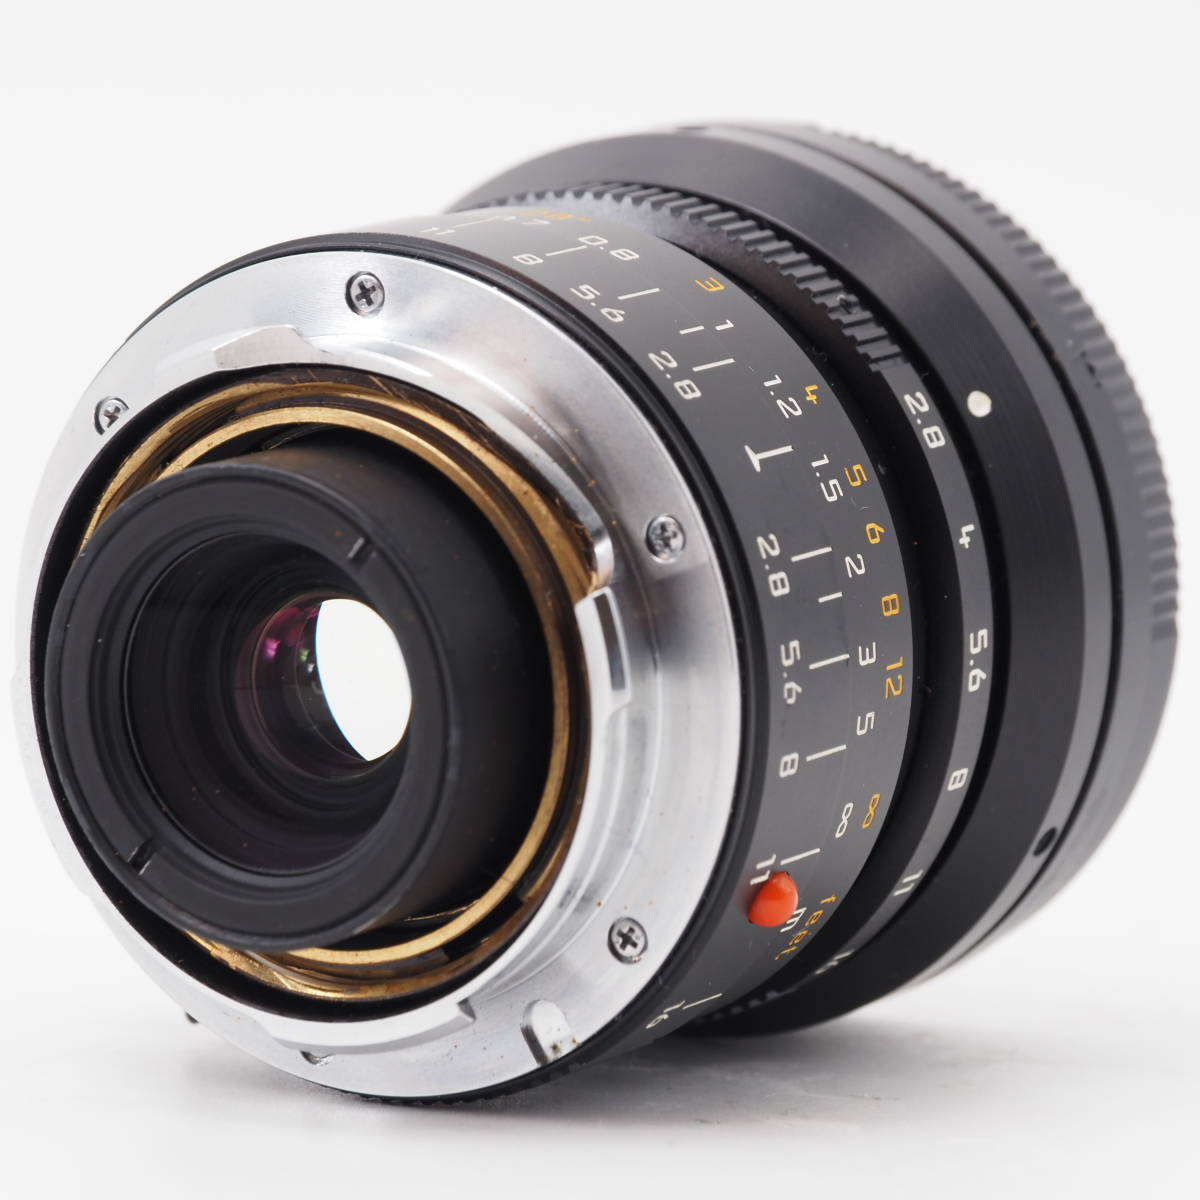 101436_* finest quality goods *Leica ELMARIT-M L Marie to21mm f2.8 ASPH